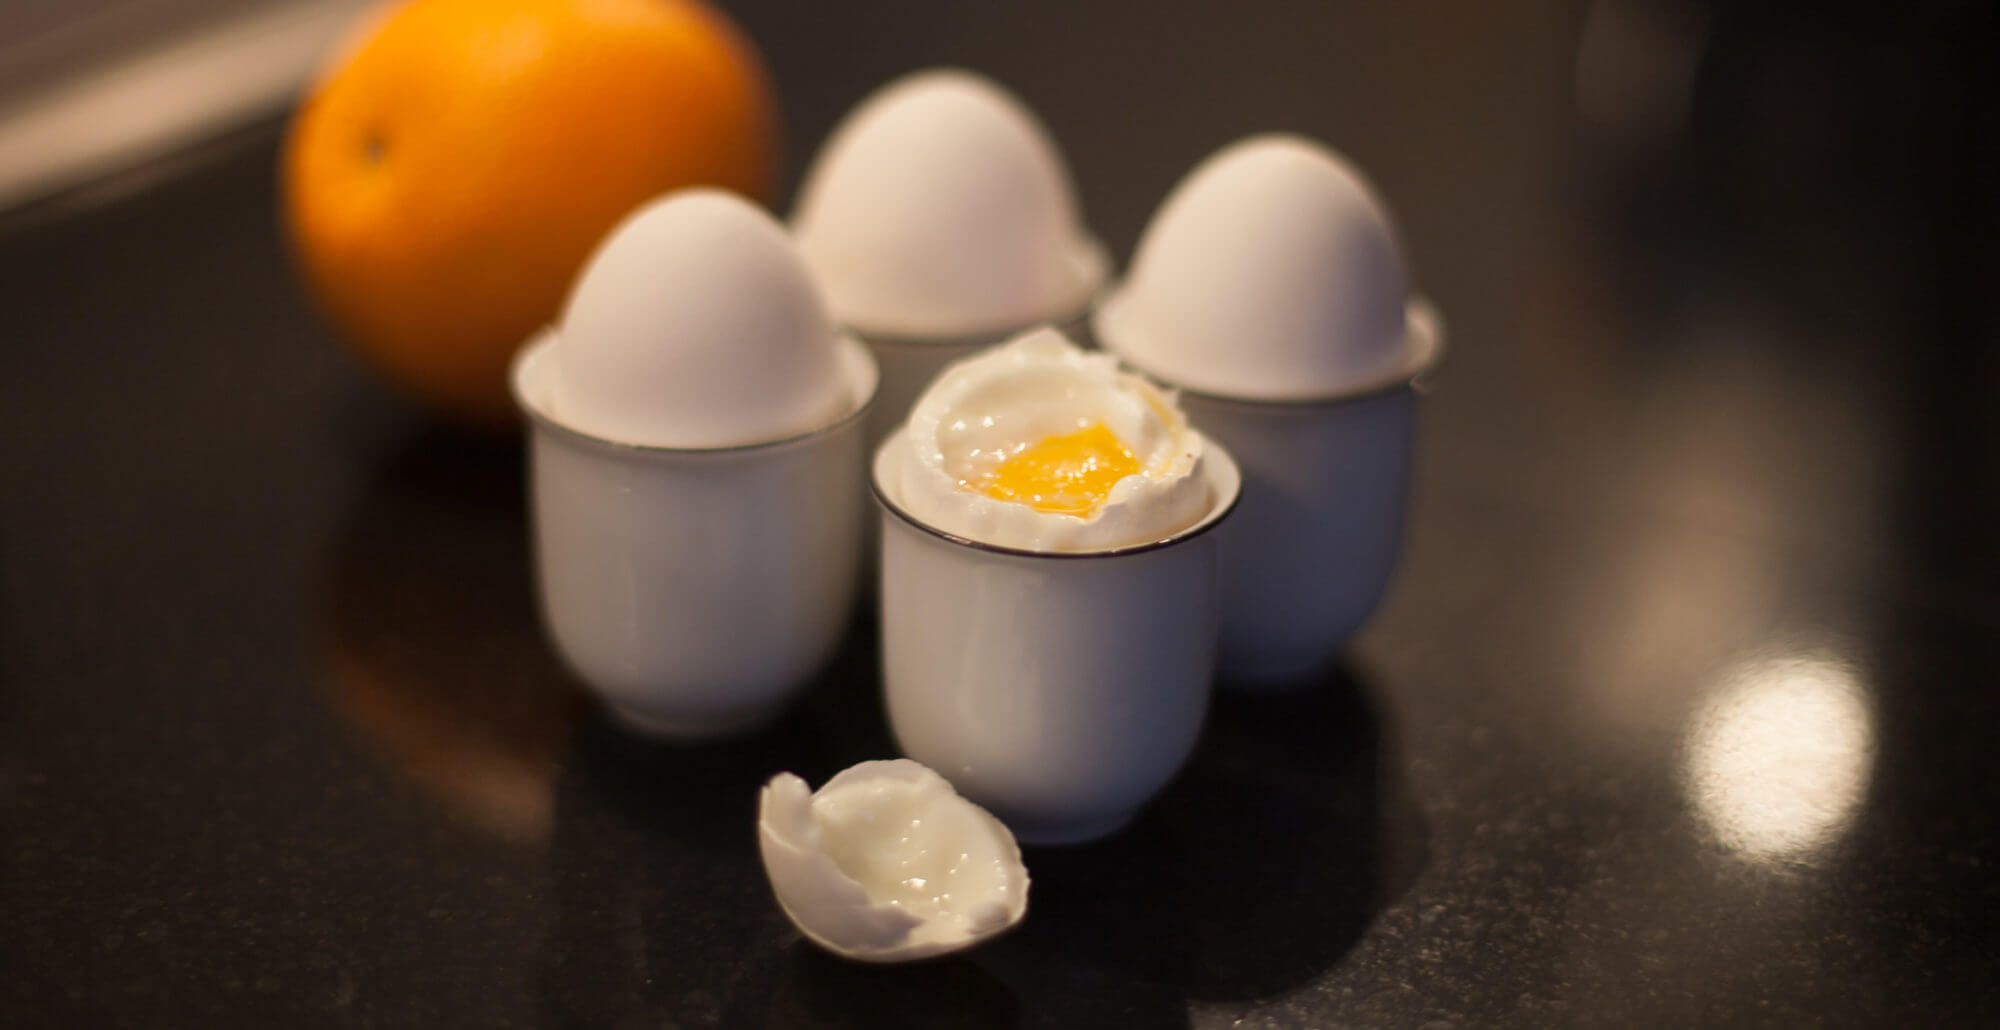 perfekte blødkogte æg med sous vide